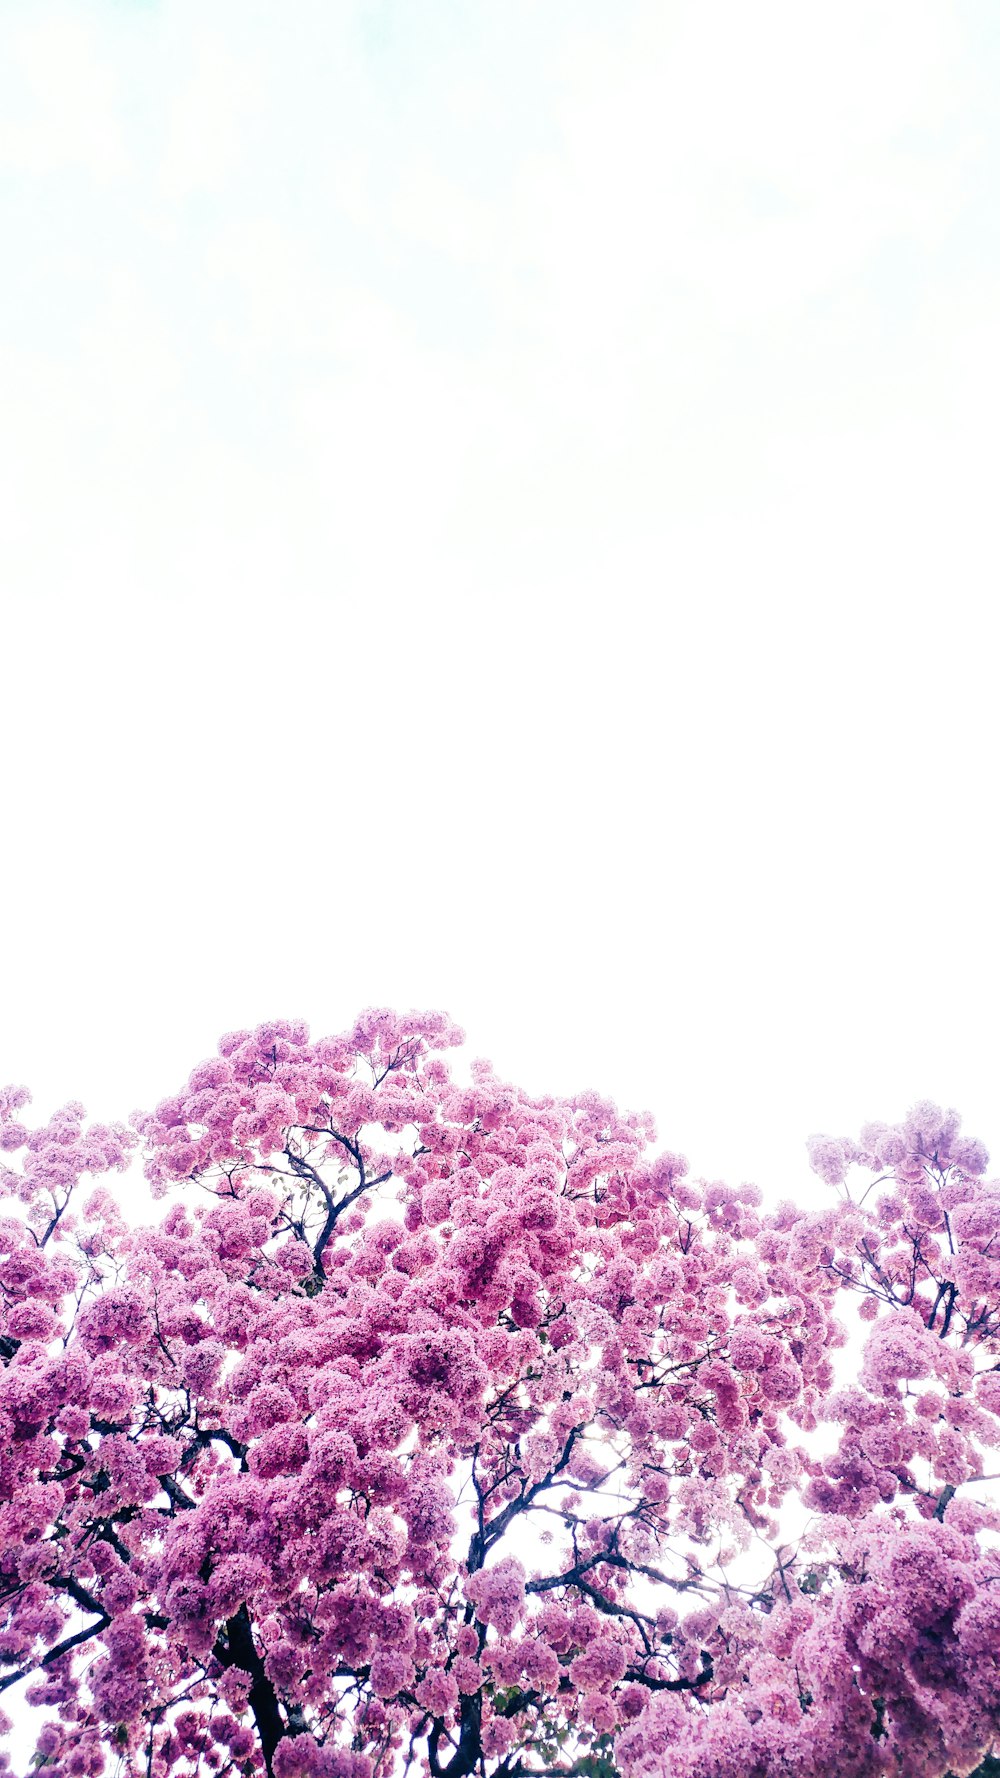 pink leafed trees